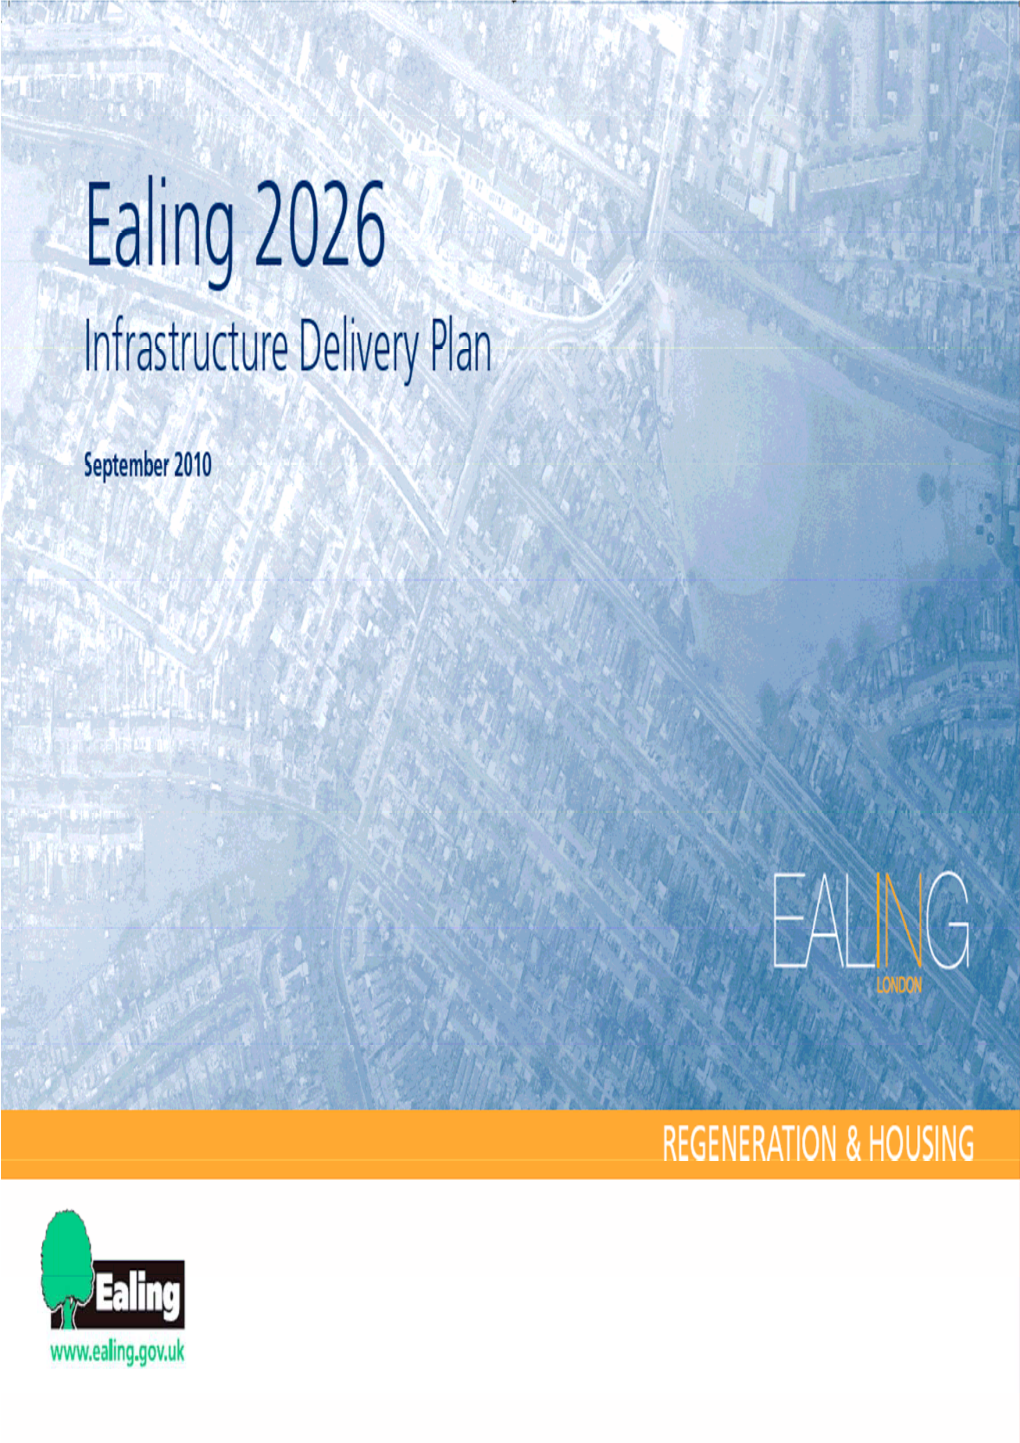 London Borough of Ealing Property Strategy (2010)